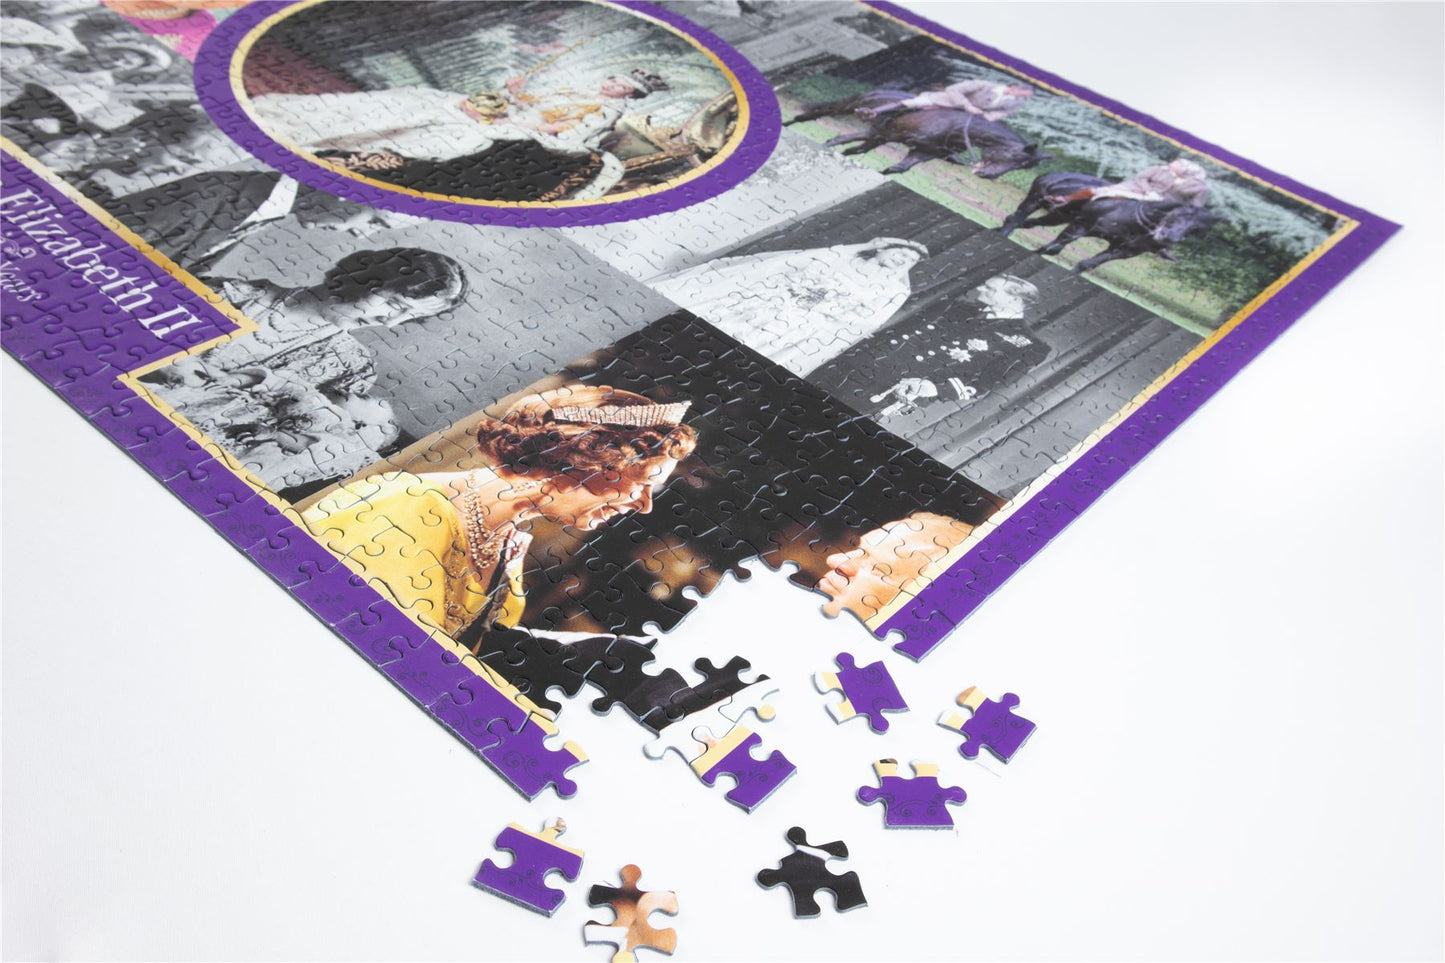 Queen Elizabeth II Through the Years 1000 Piece Jigsaw Puzzle